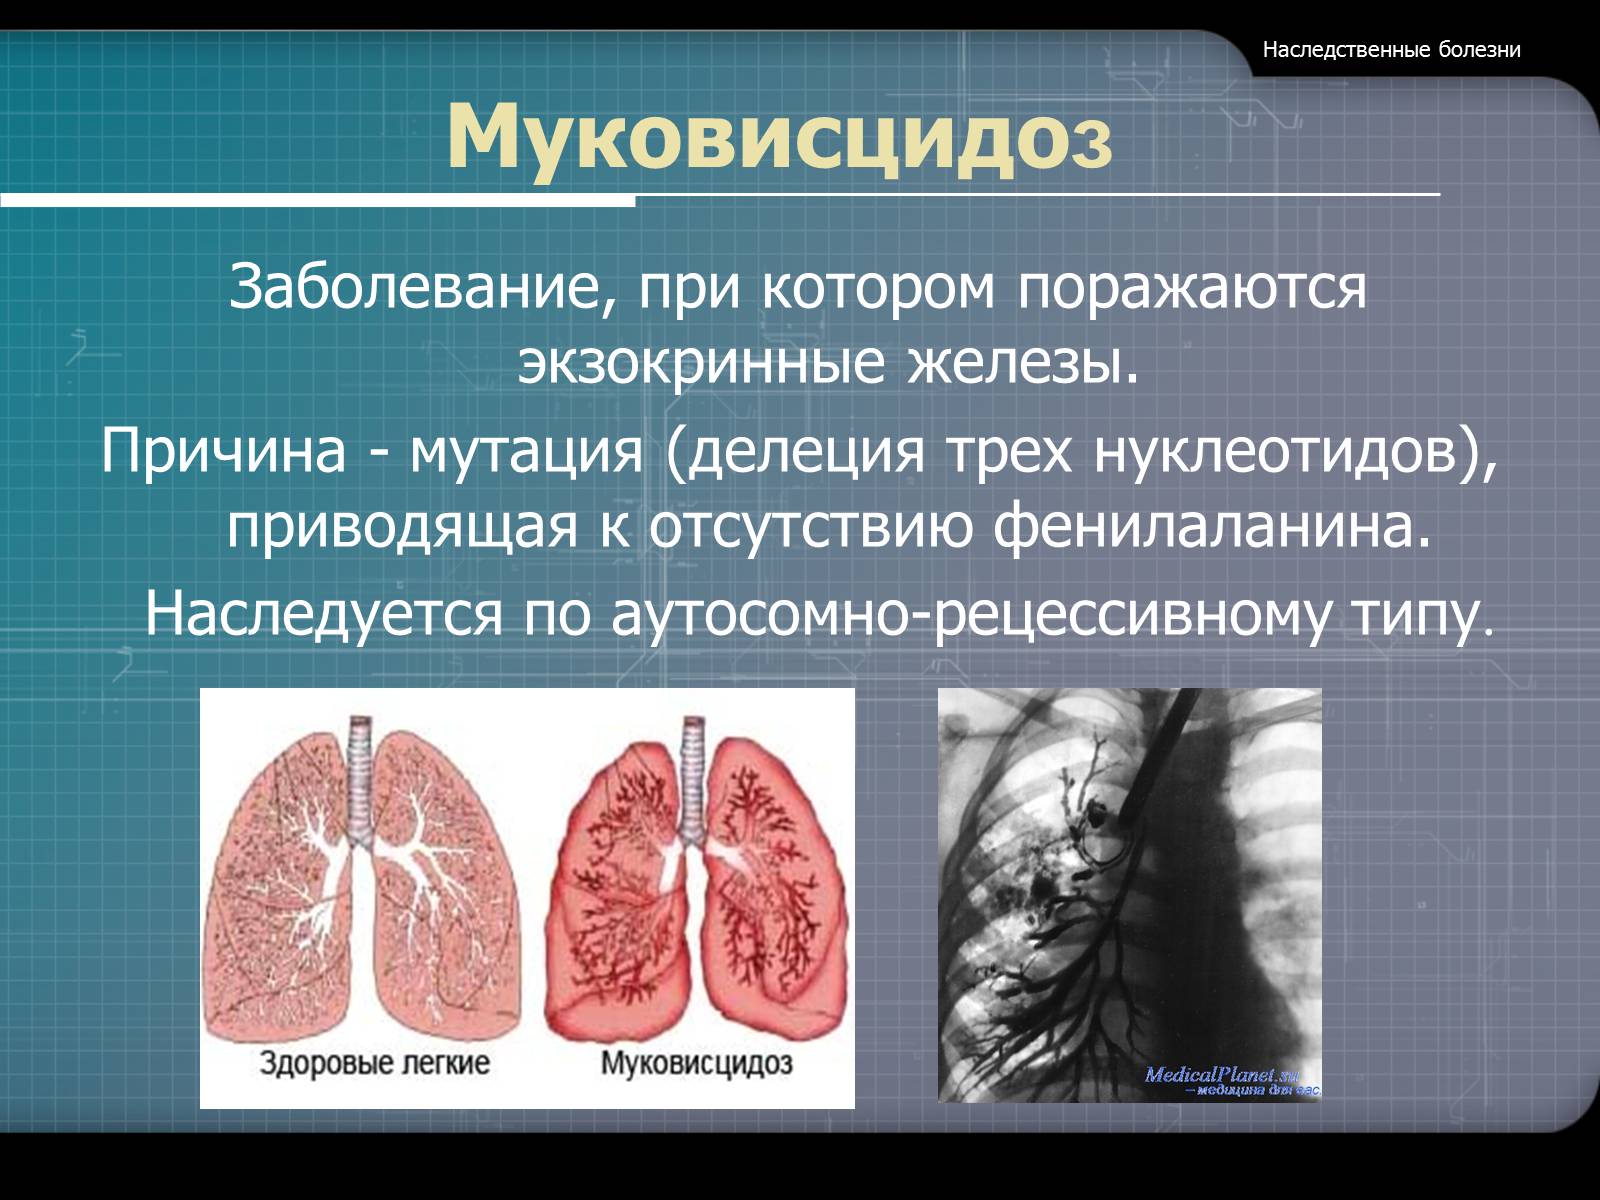 Презентація на тему «Наследственные болезни» - Слайд #9